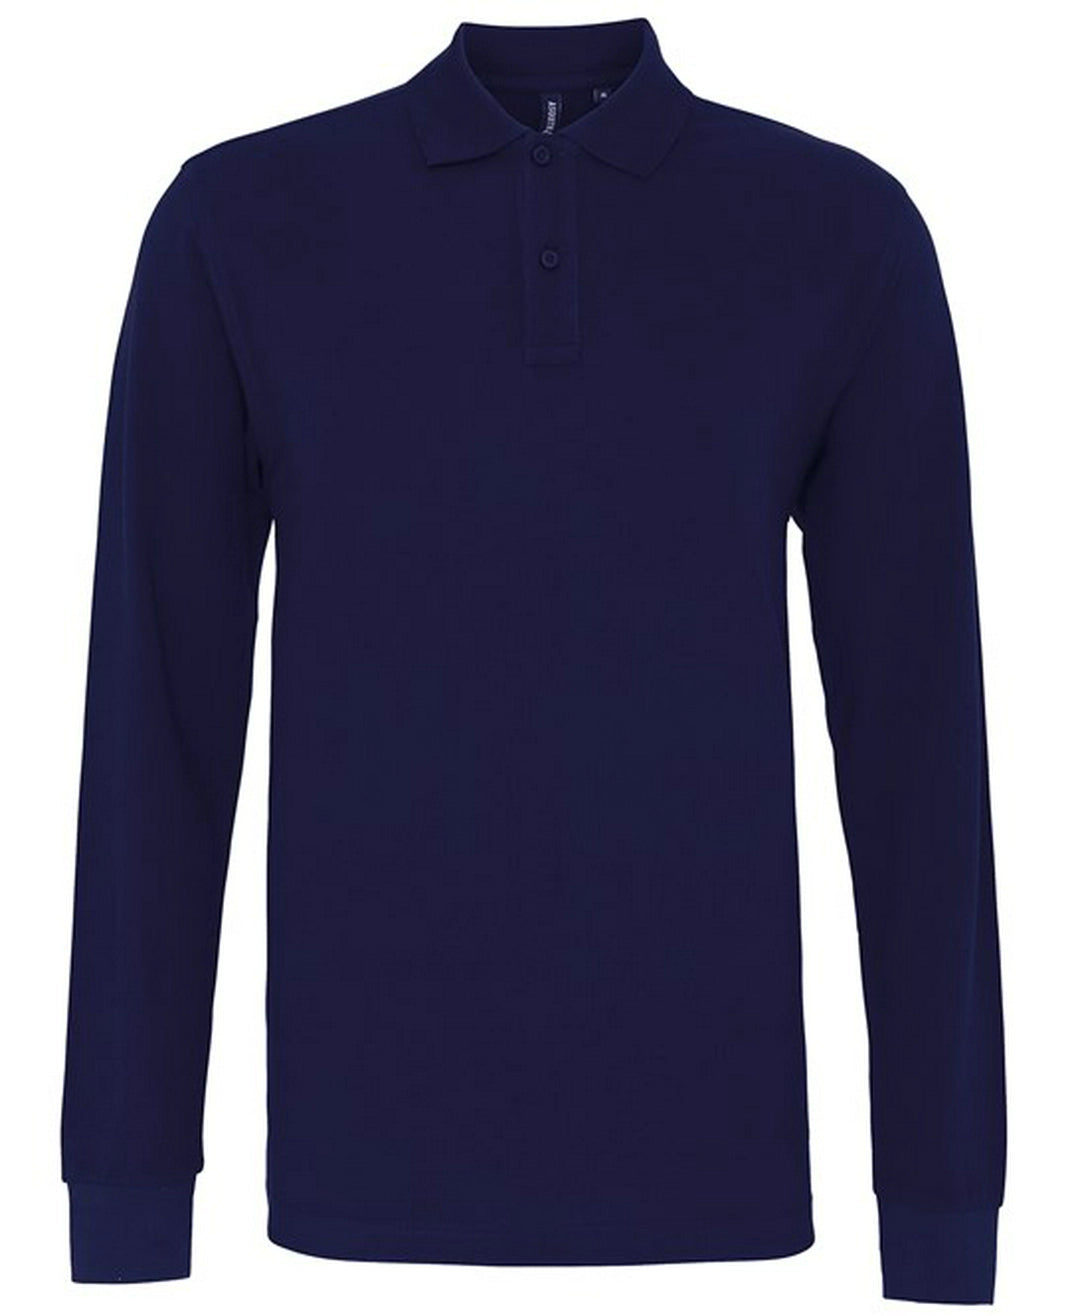 Asquith & Fox AQ030 Mens Classic Fit Long Sleeve Polo Shirt - COOZO